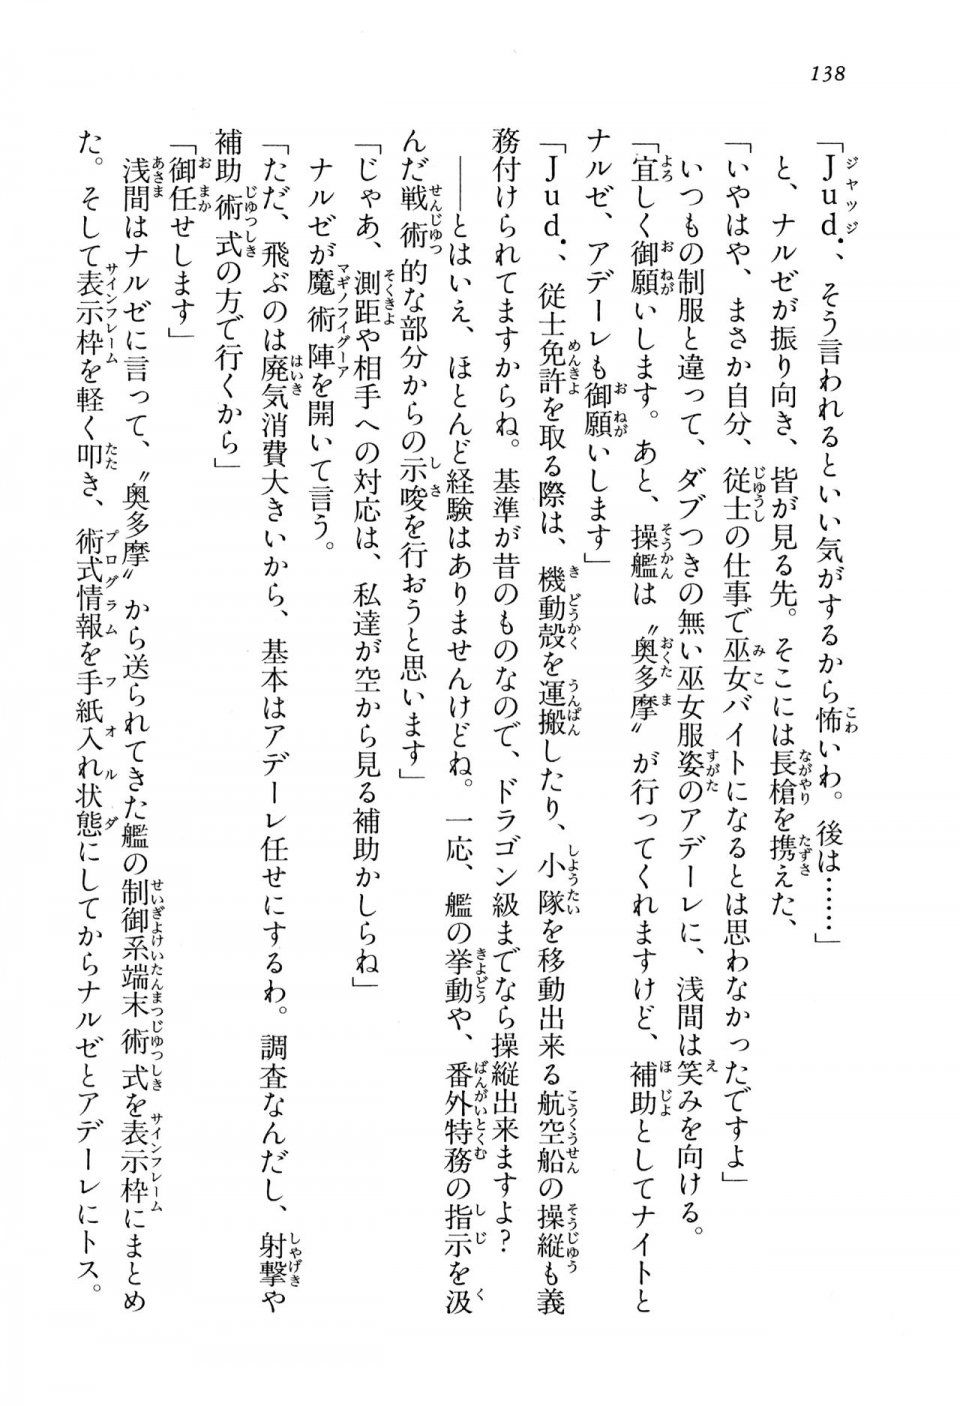 Kyoukai Senjou no Horizon BD Special Mininovel Vol 3(2A) - Photo #142